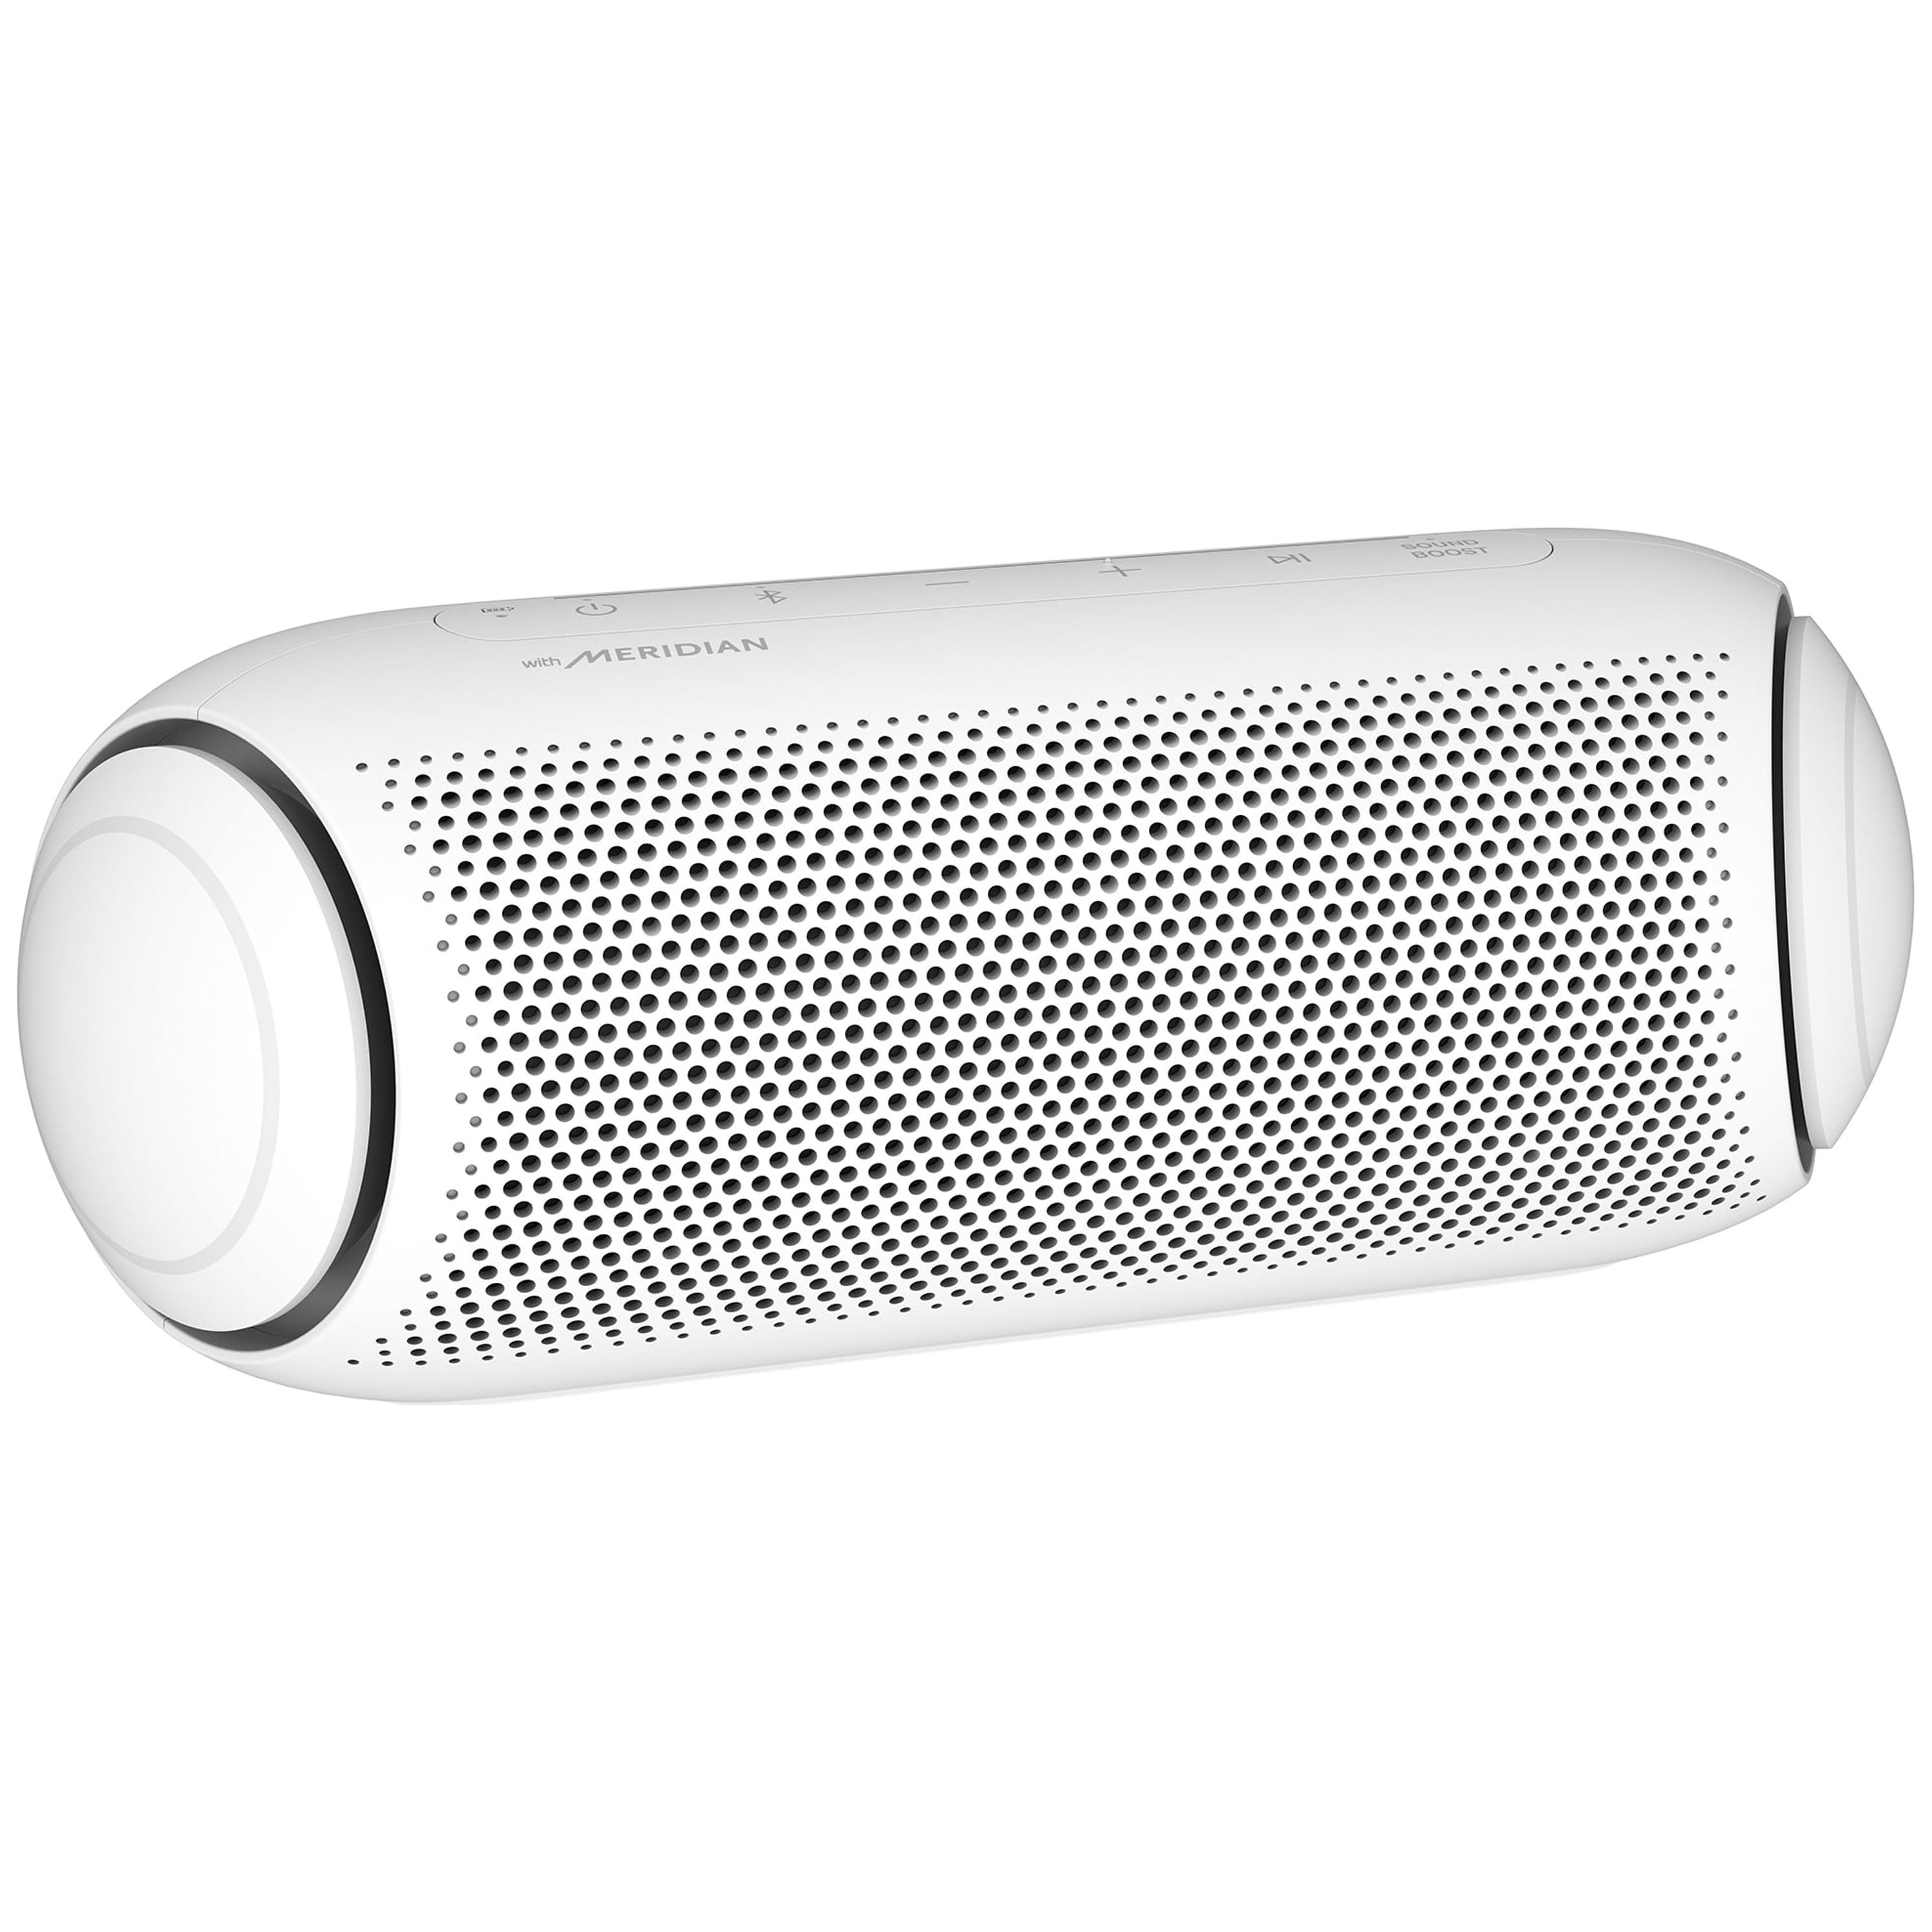 LG XBOOM Portable Bluetooth Speaker, White, PL5W - image 2 of 13